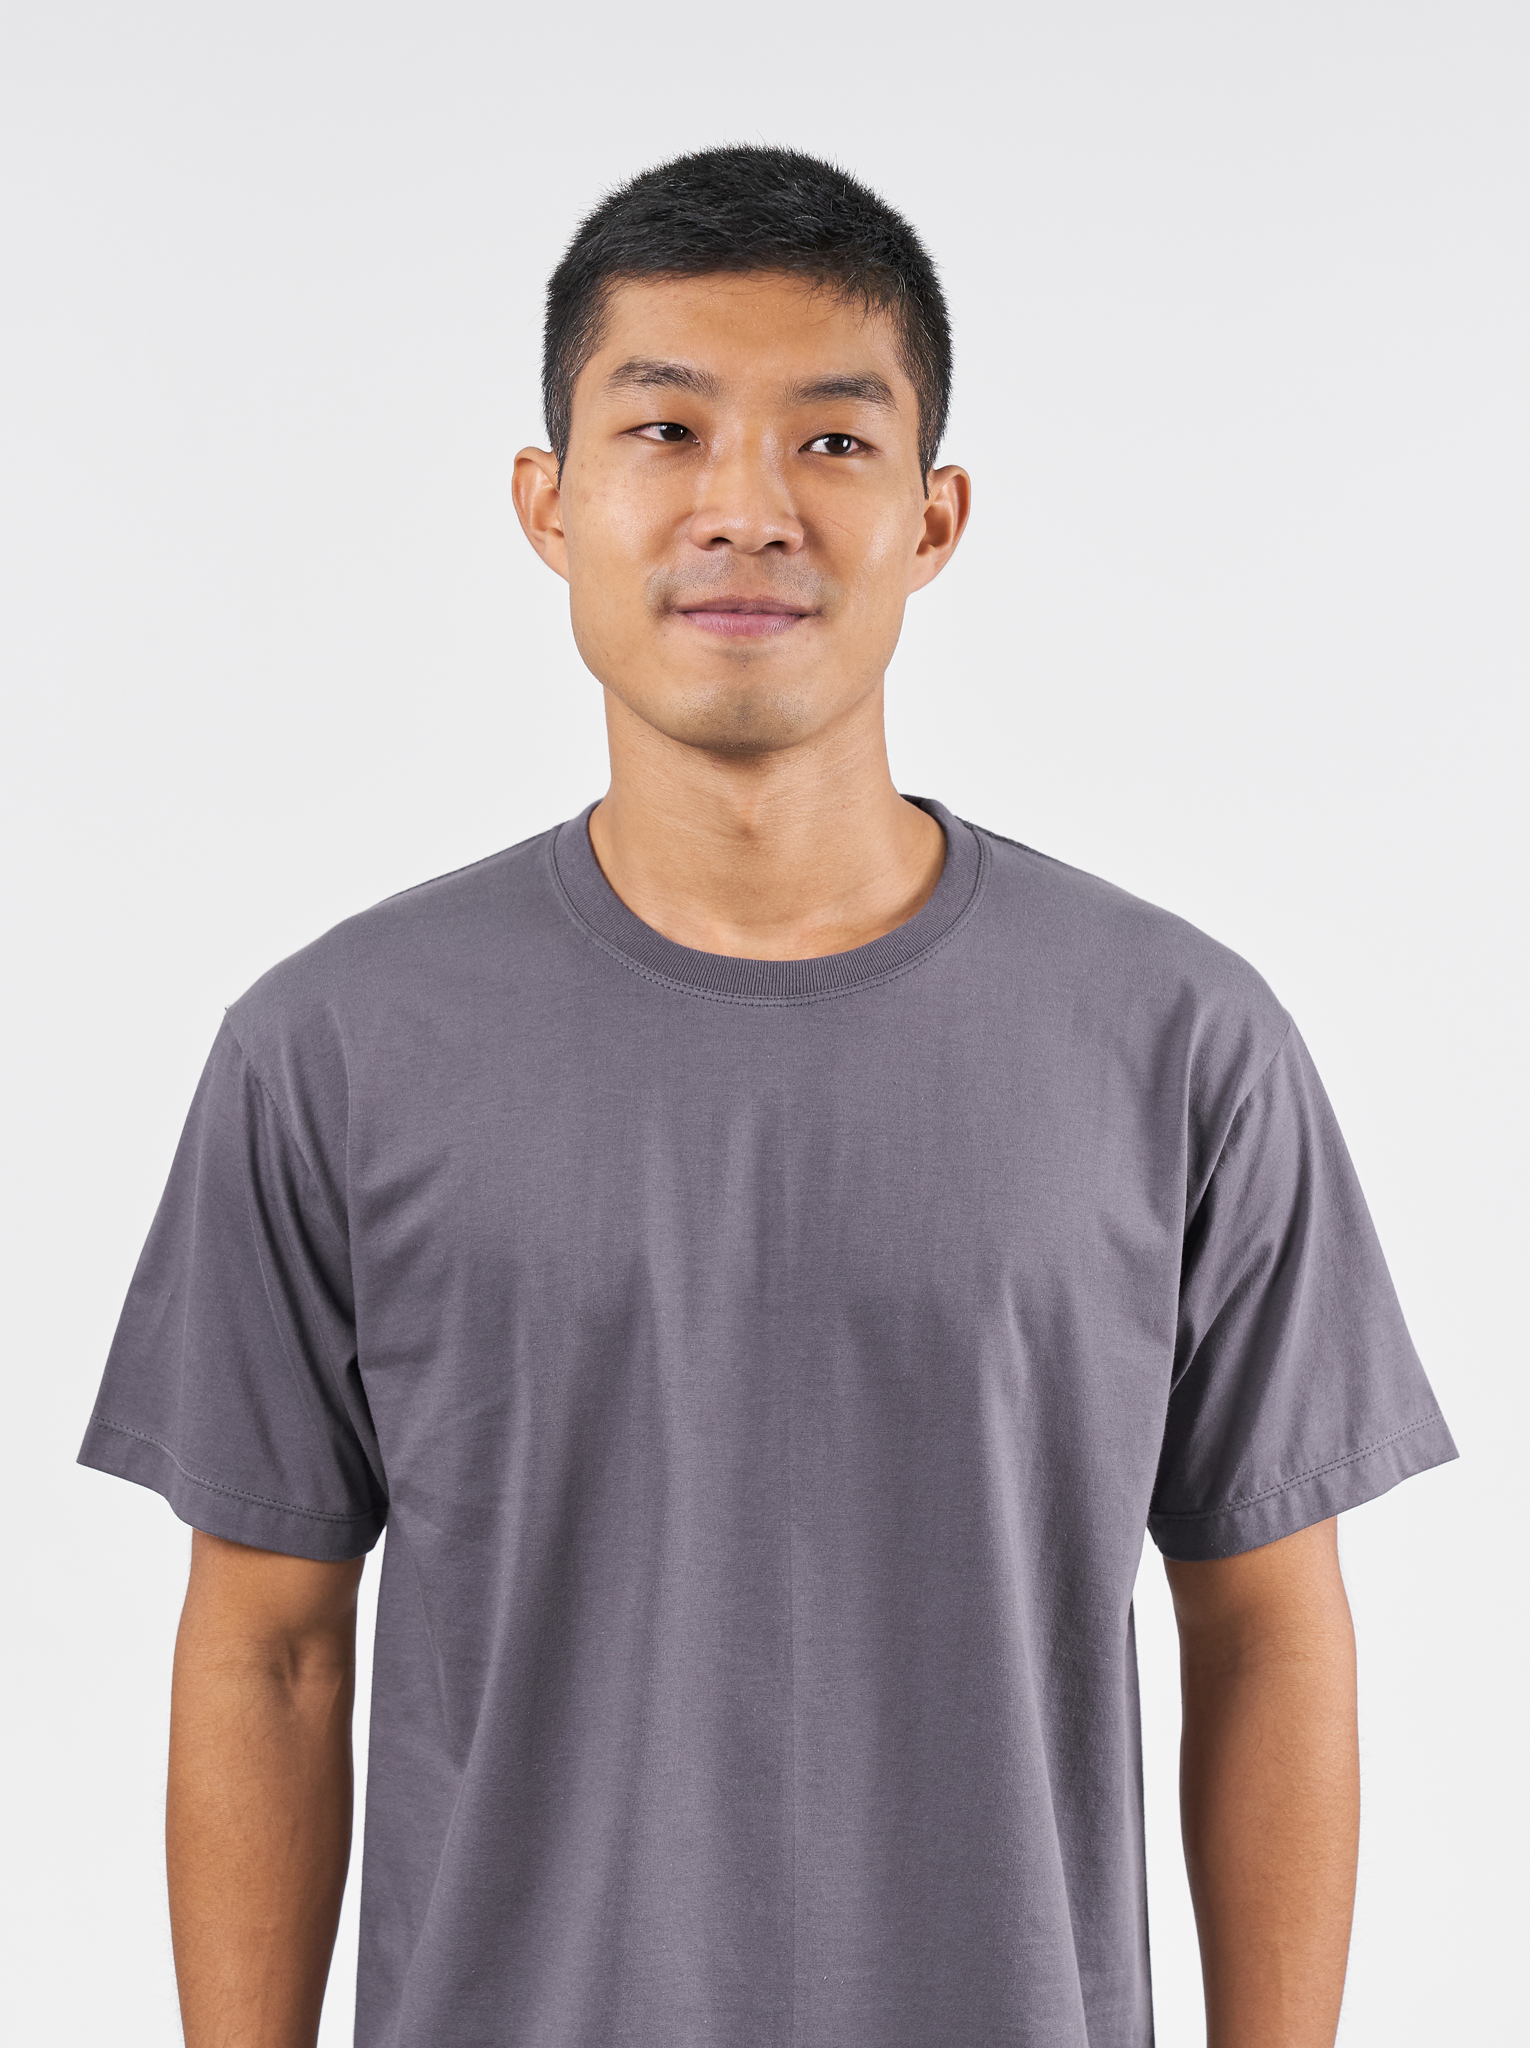 T-Shirt เสื้อยืด (Dark Grey, สีเทาเข้ม)(Unisex)